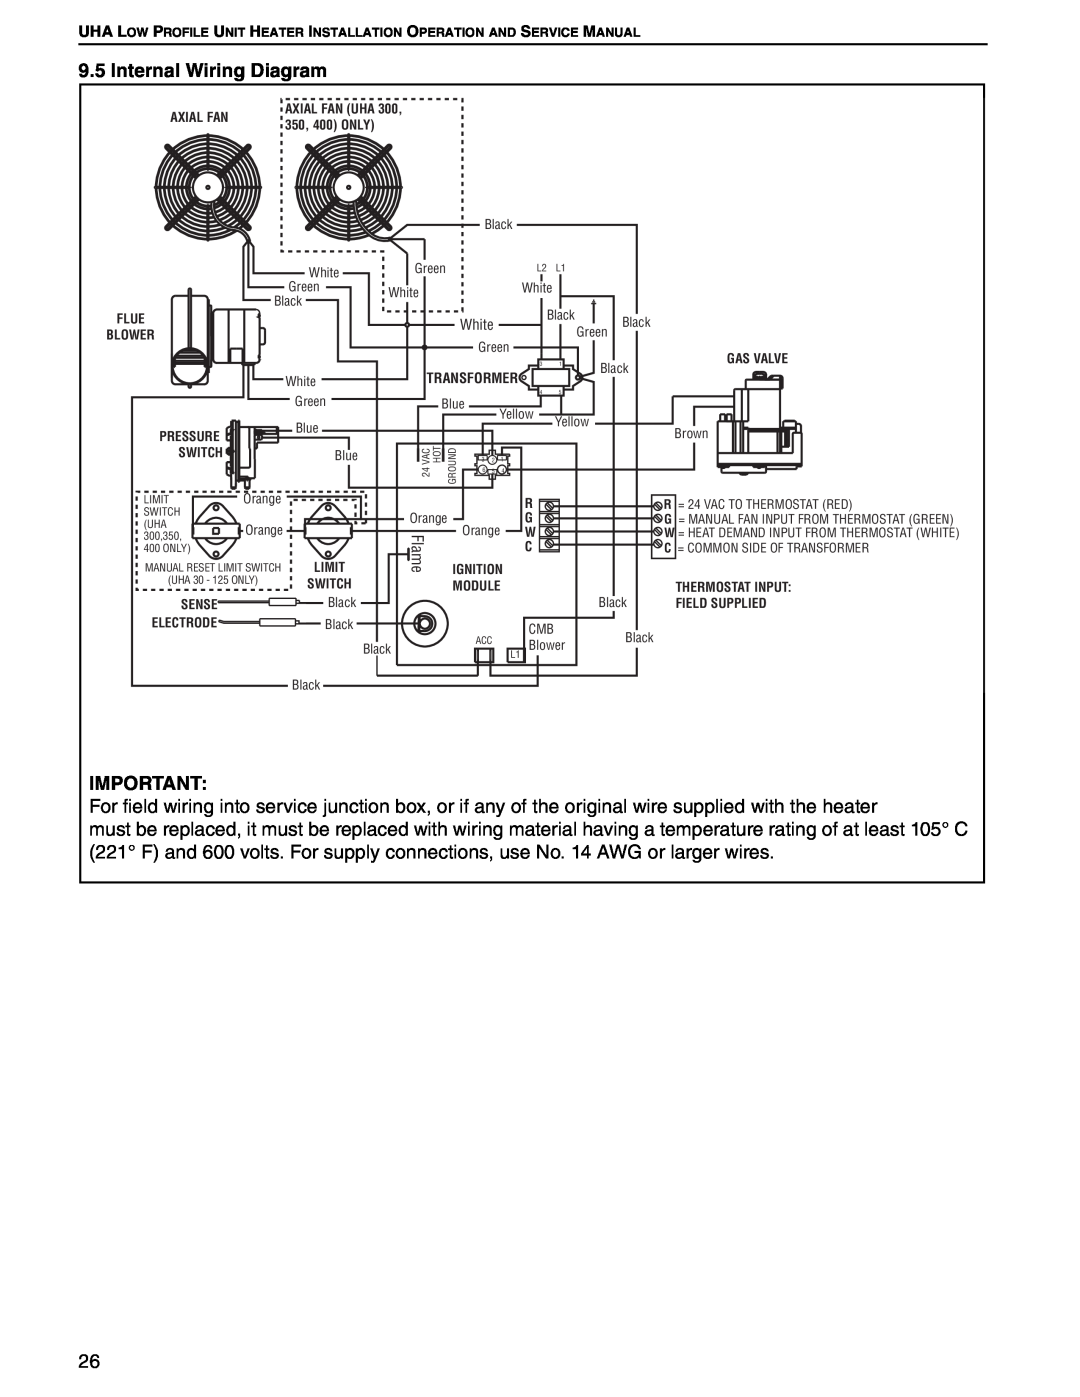 Roberts Gorden 125, 75, 100, 45, 30, 60 service manual Internal Wiring Diagram 